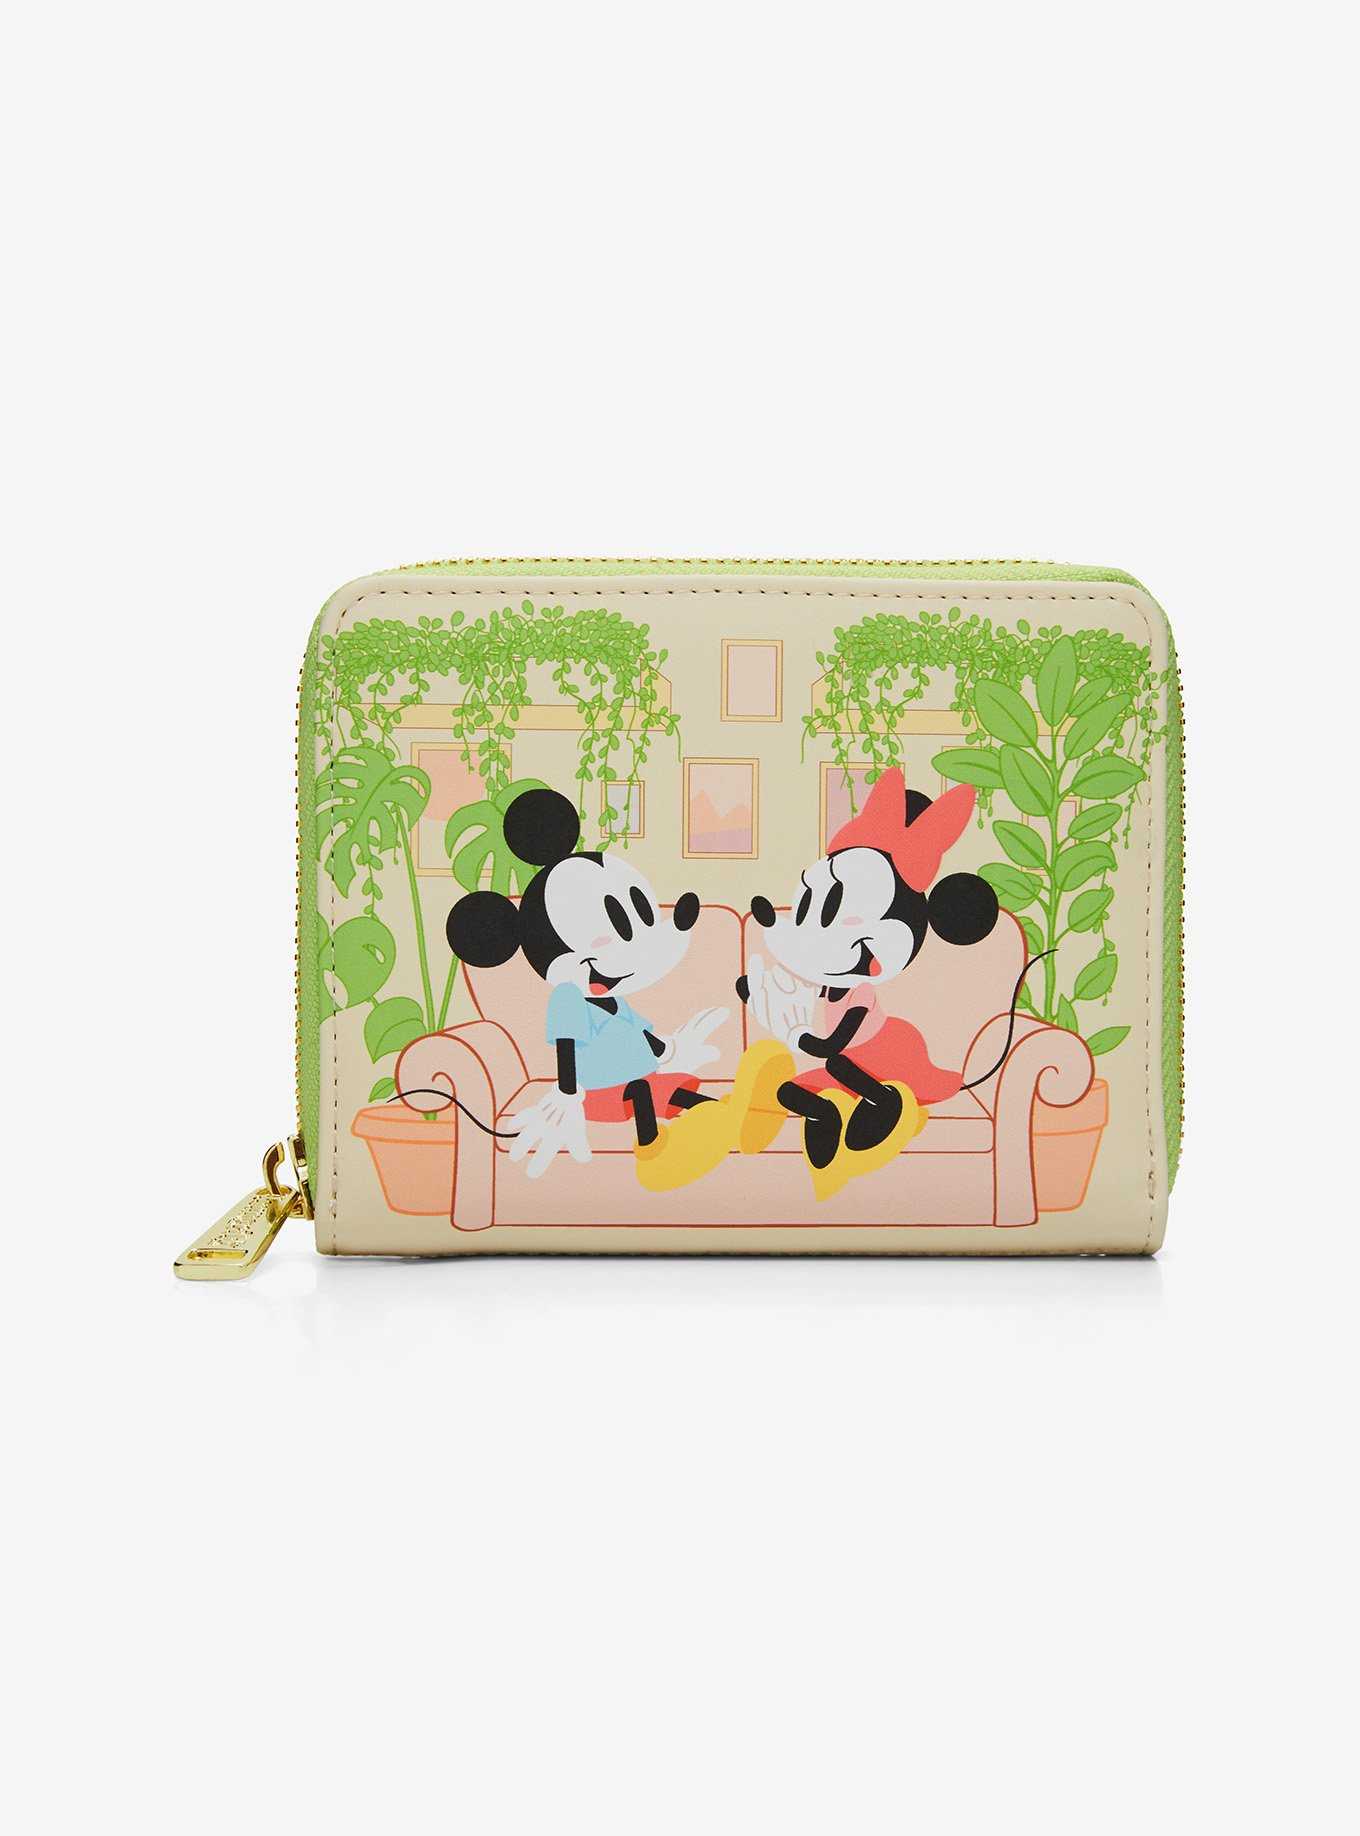 Disney Gold & Black Mickey Mouse Wallet Pouch Bag Purse Shoulder Strap —  Beyond Collectibles